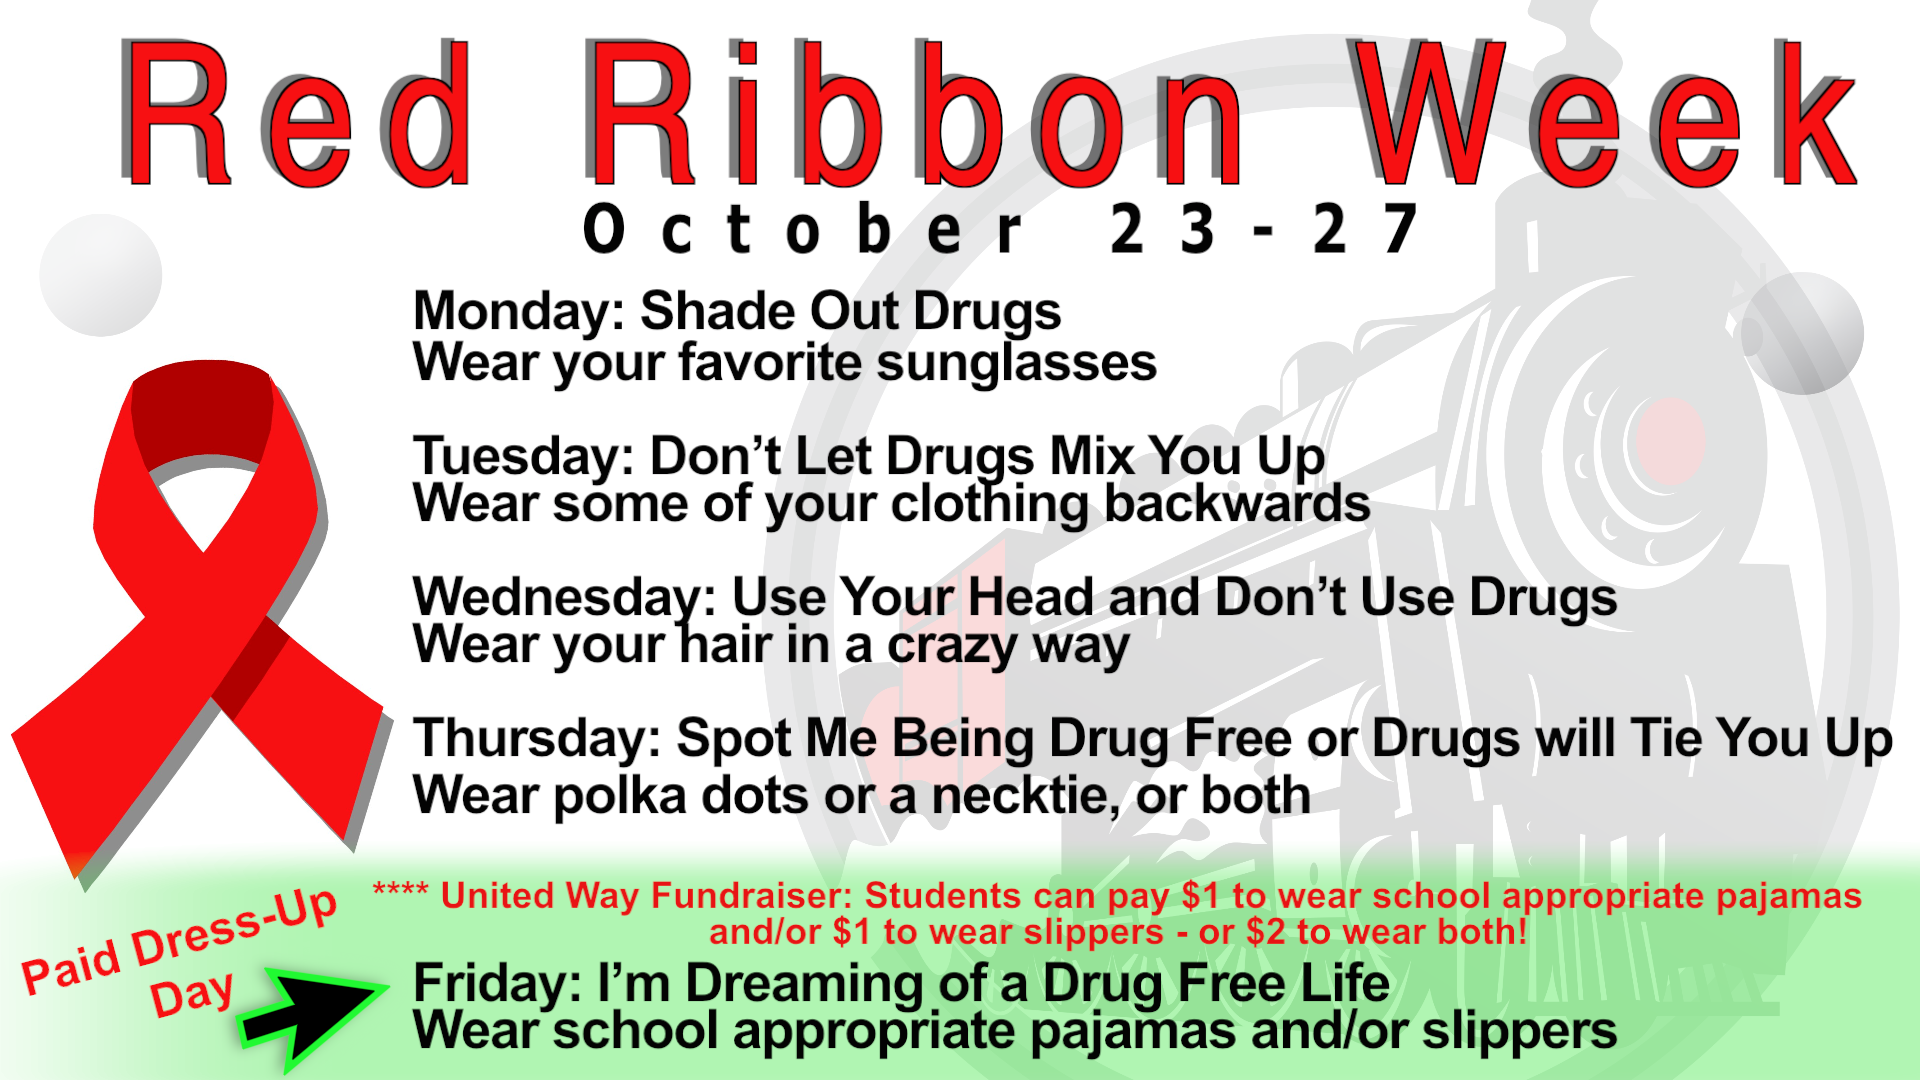 Red Ribbon Week at Webster October 23-27